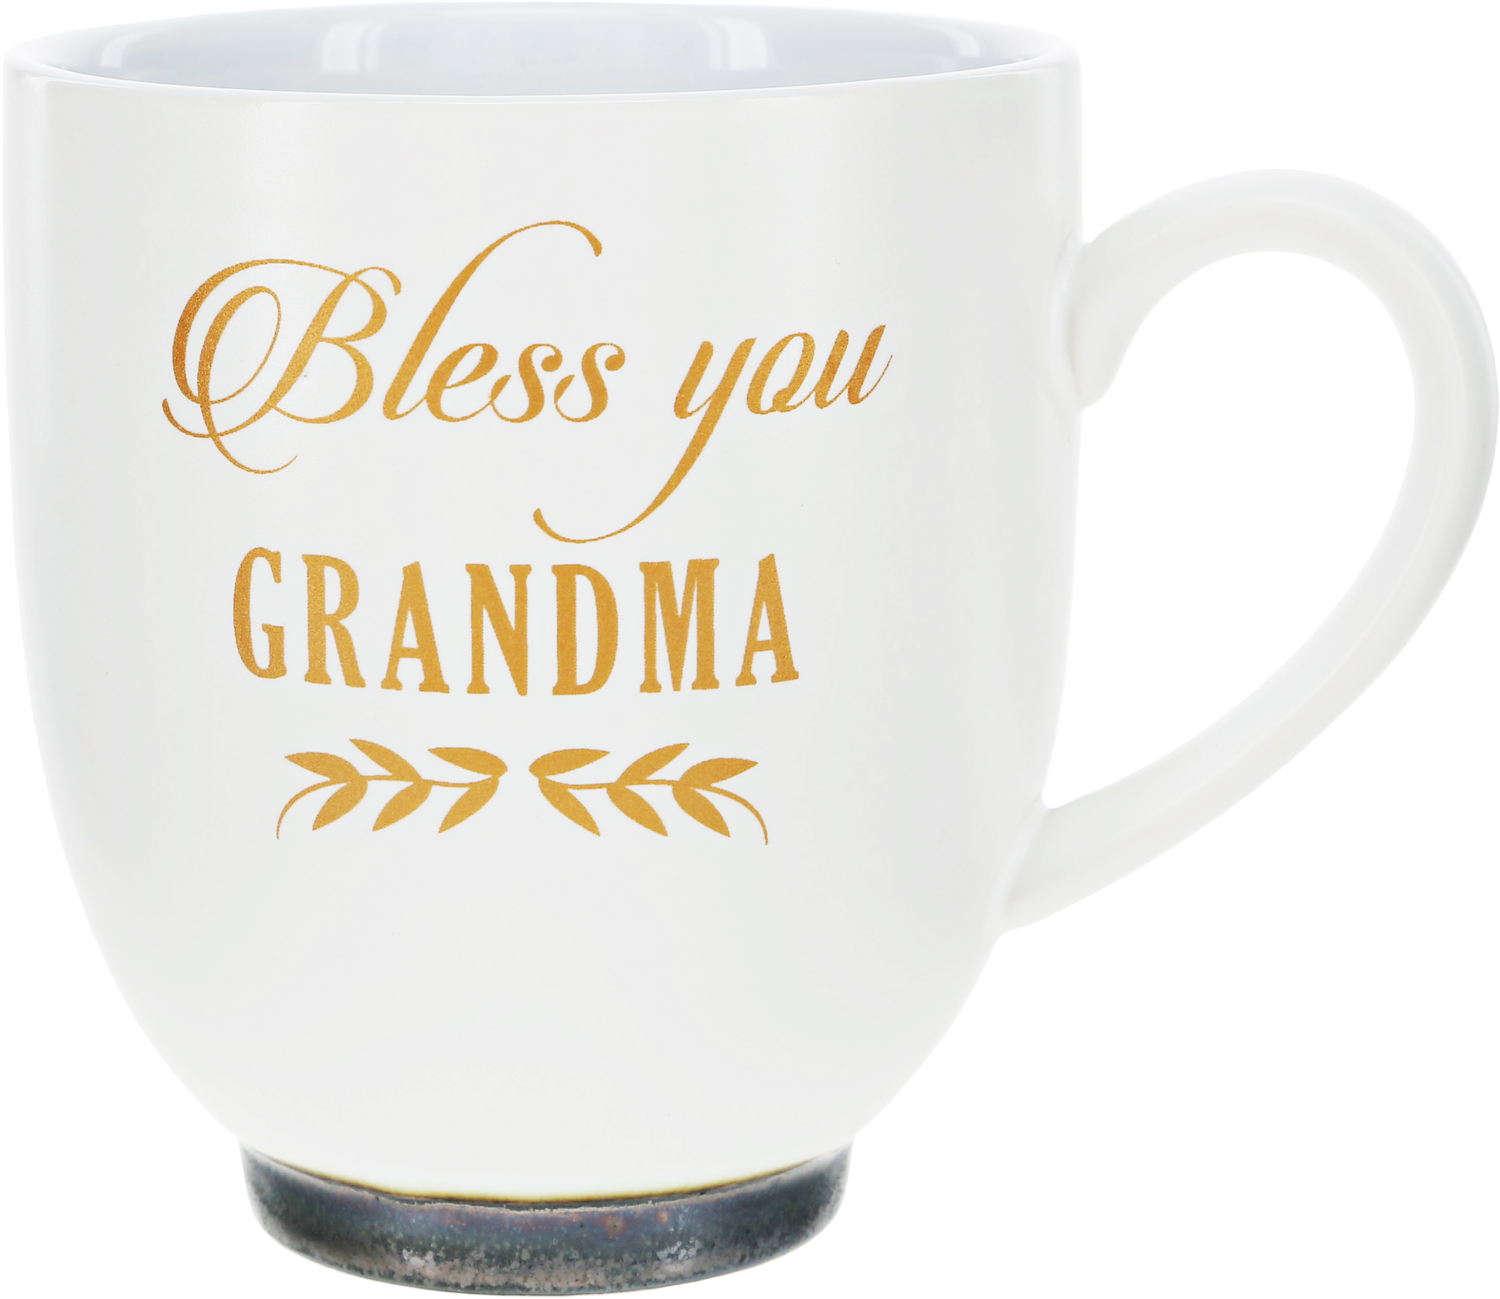 Grandma by Blessed by You - Grandma - 15.5 oz Cup